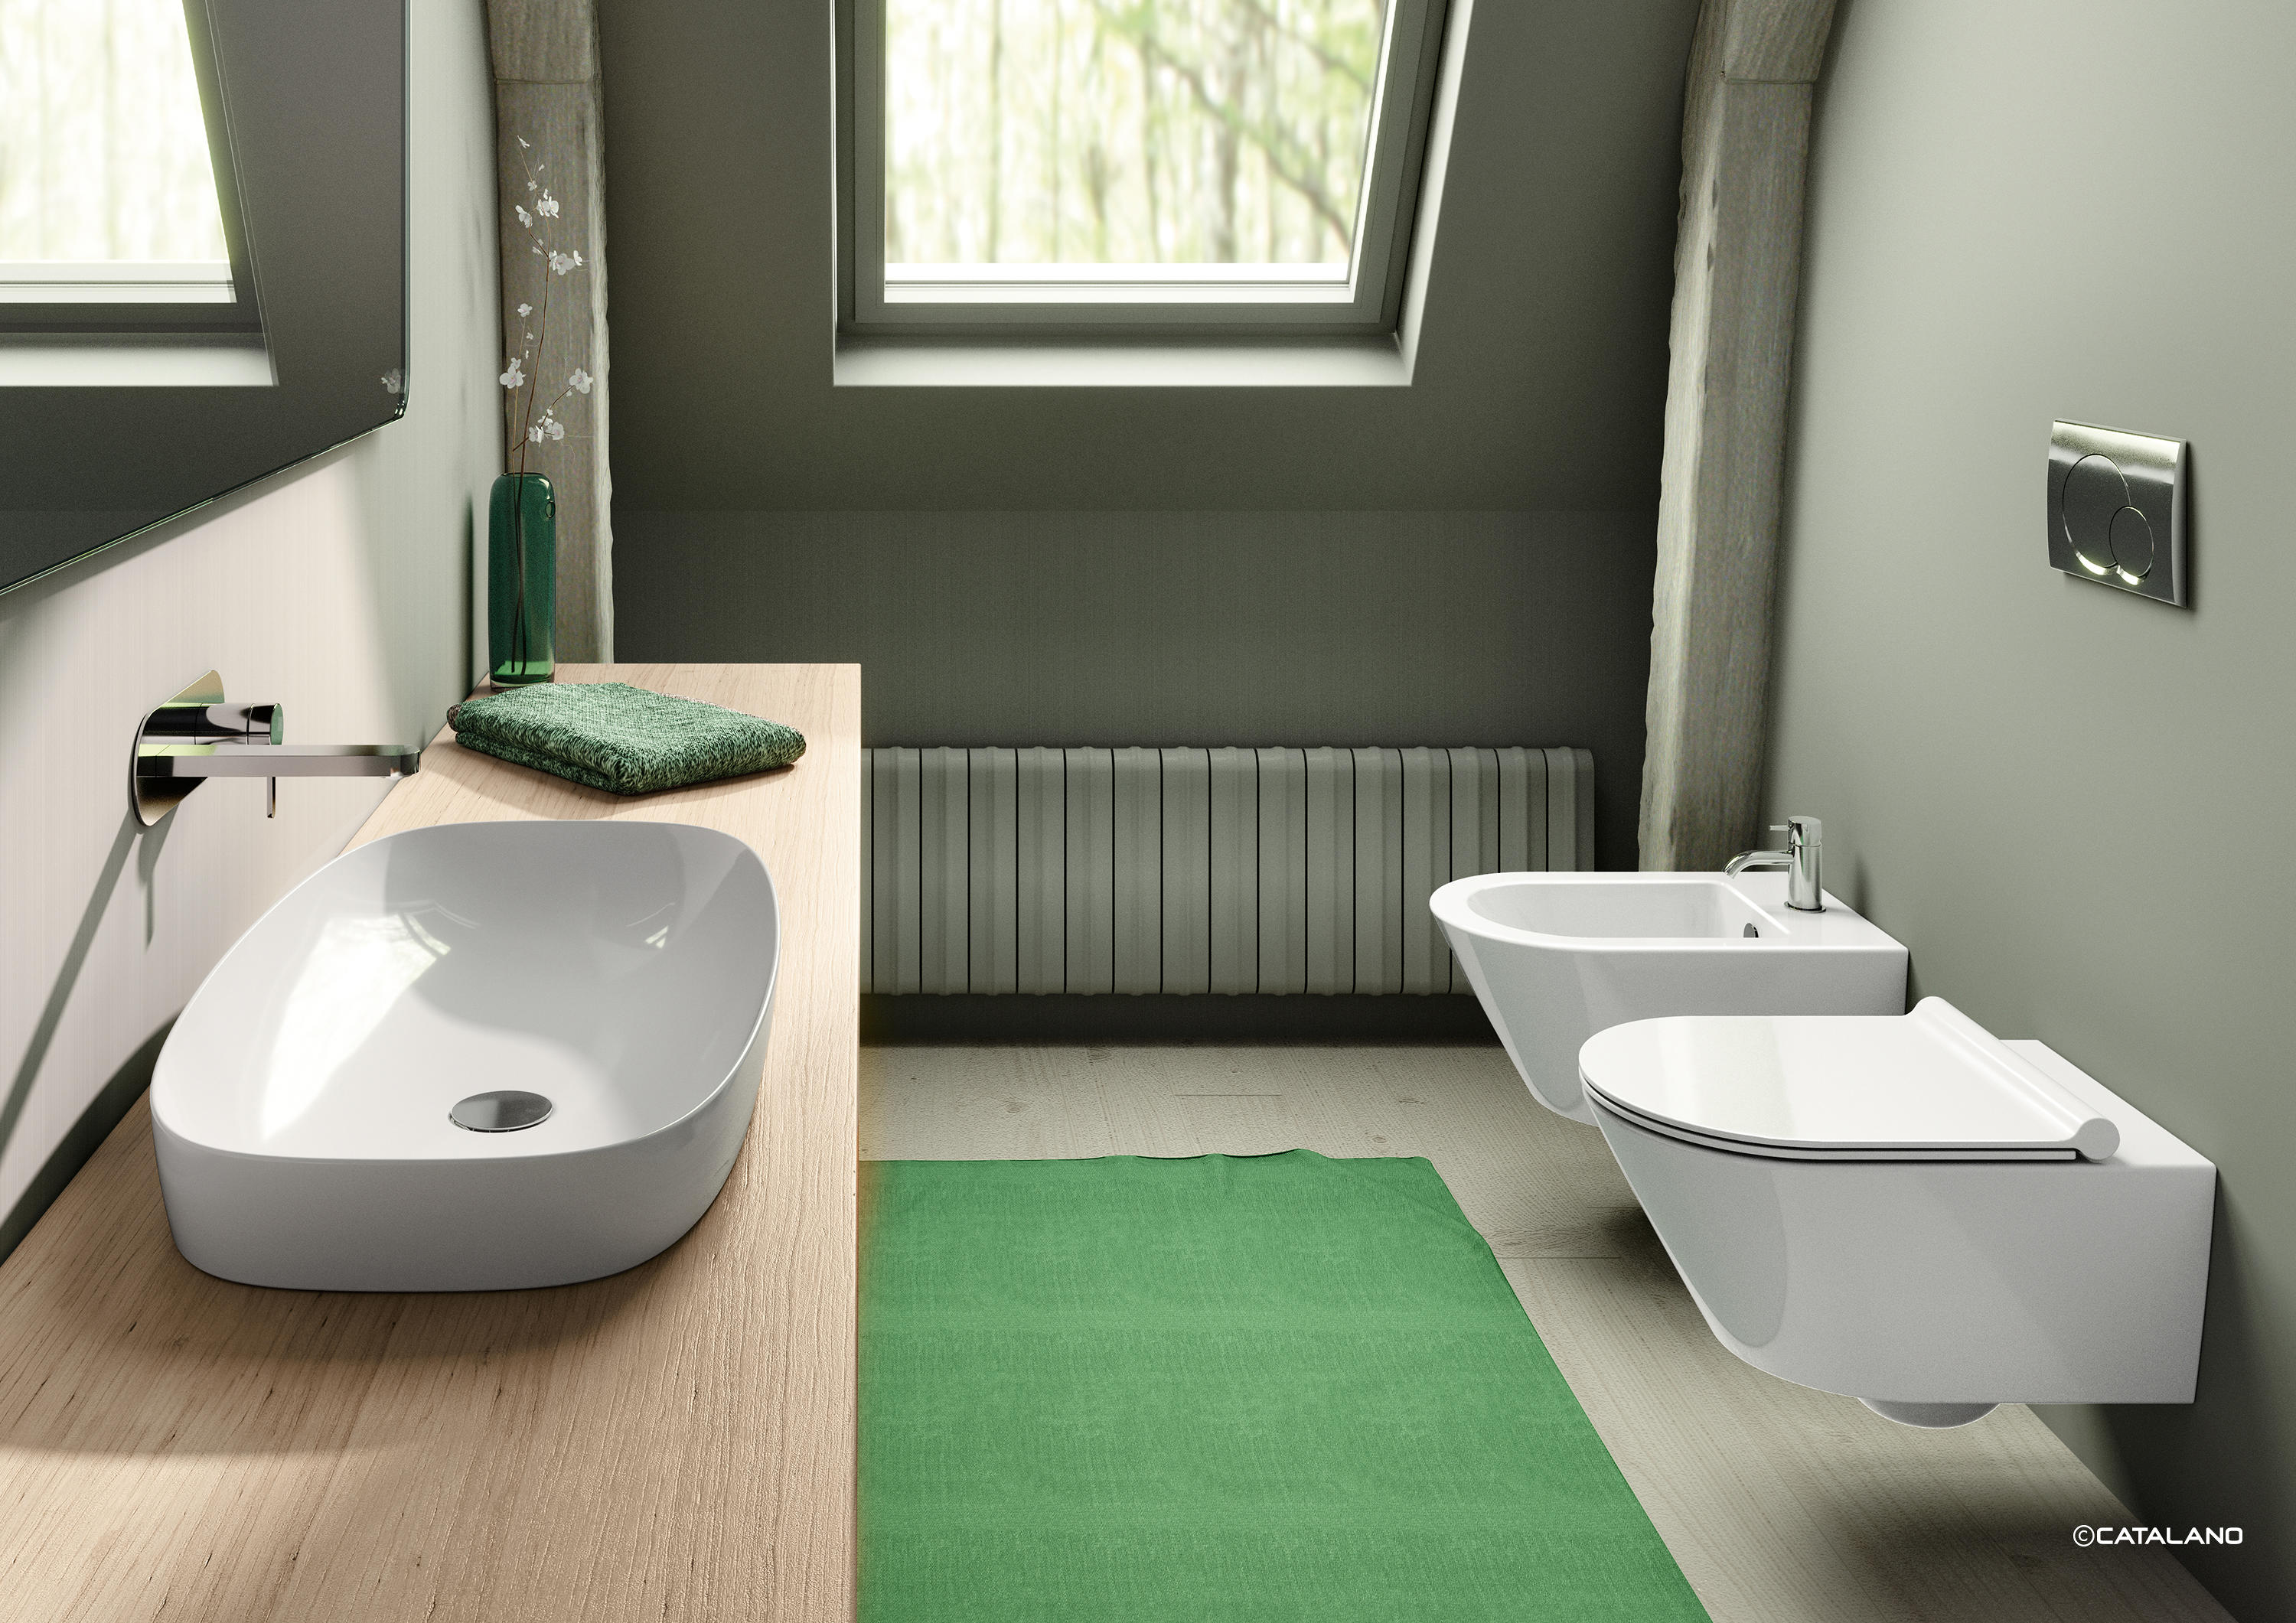 GREEN 80X50 - Wash basins from Ceramica Catalano